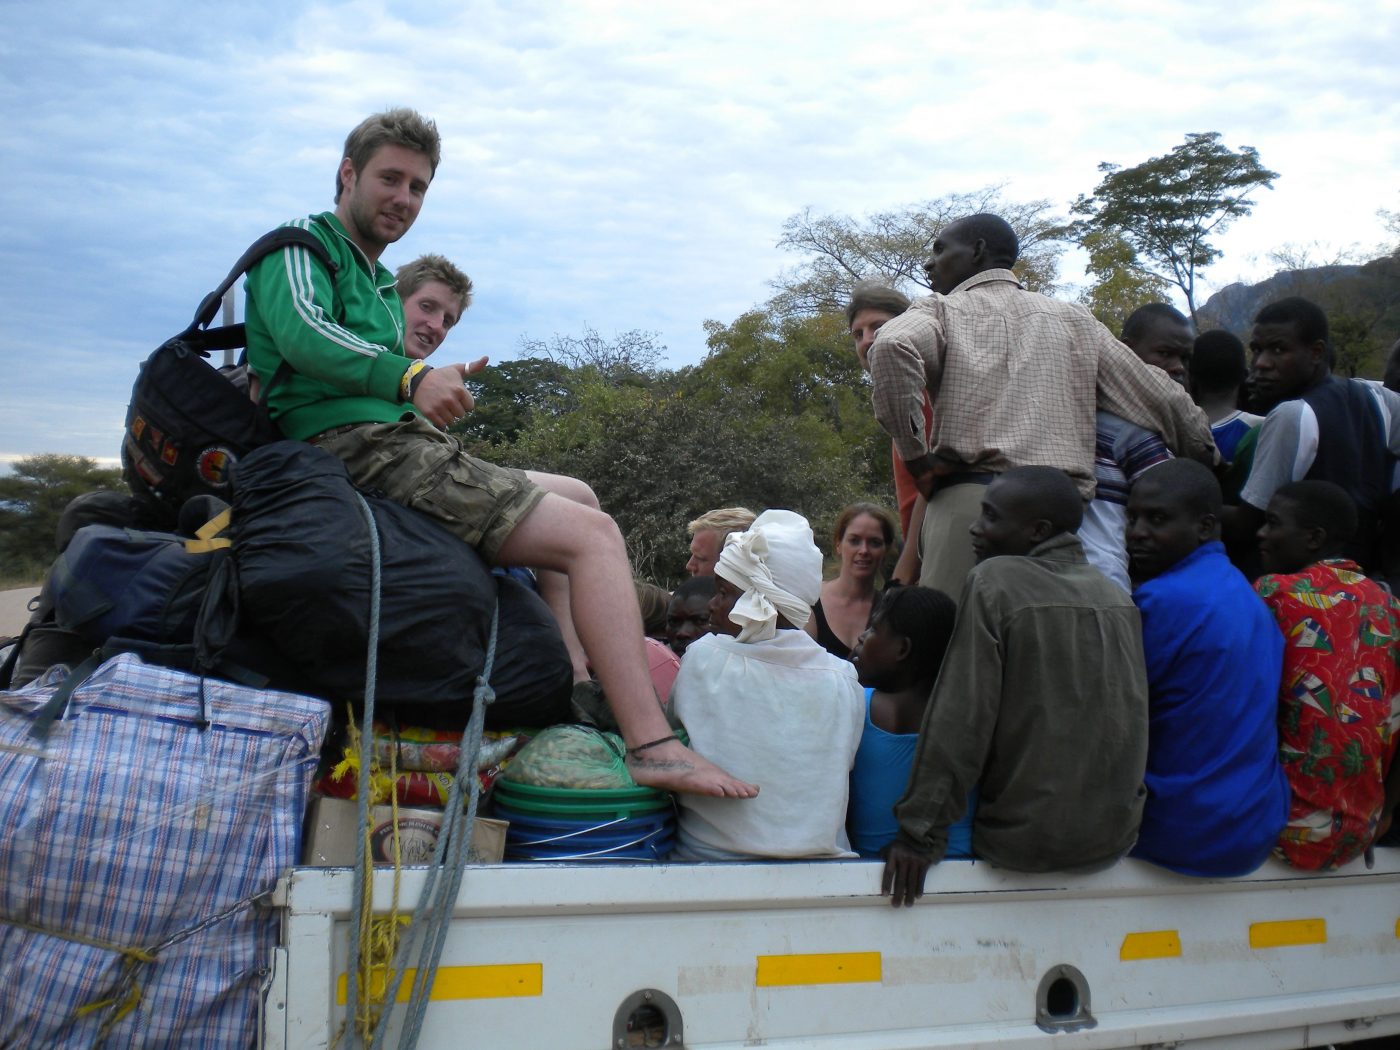 Transport in Malawi